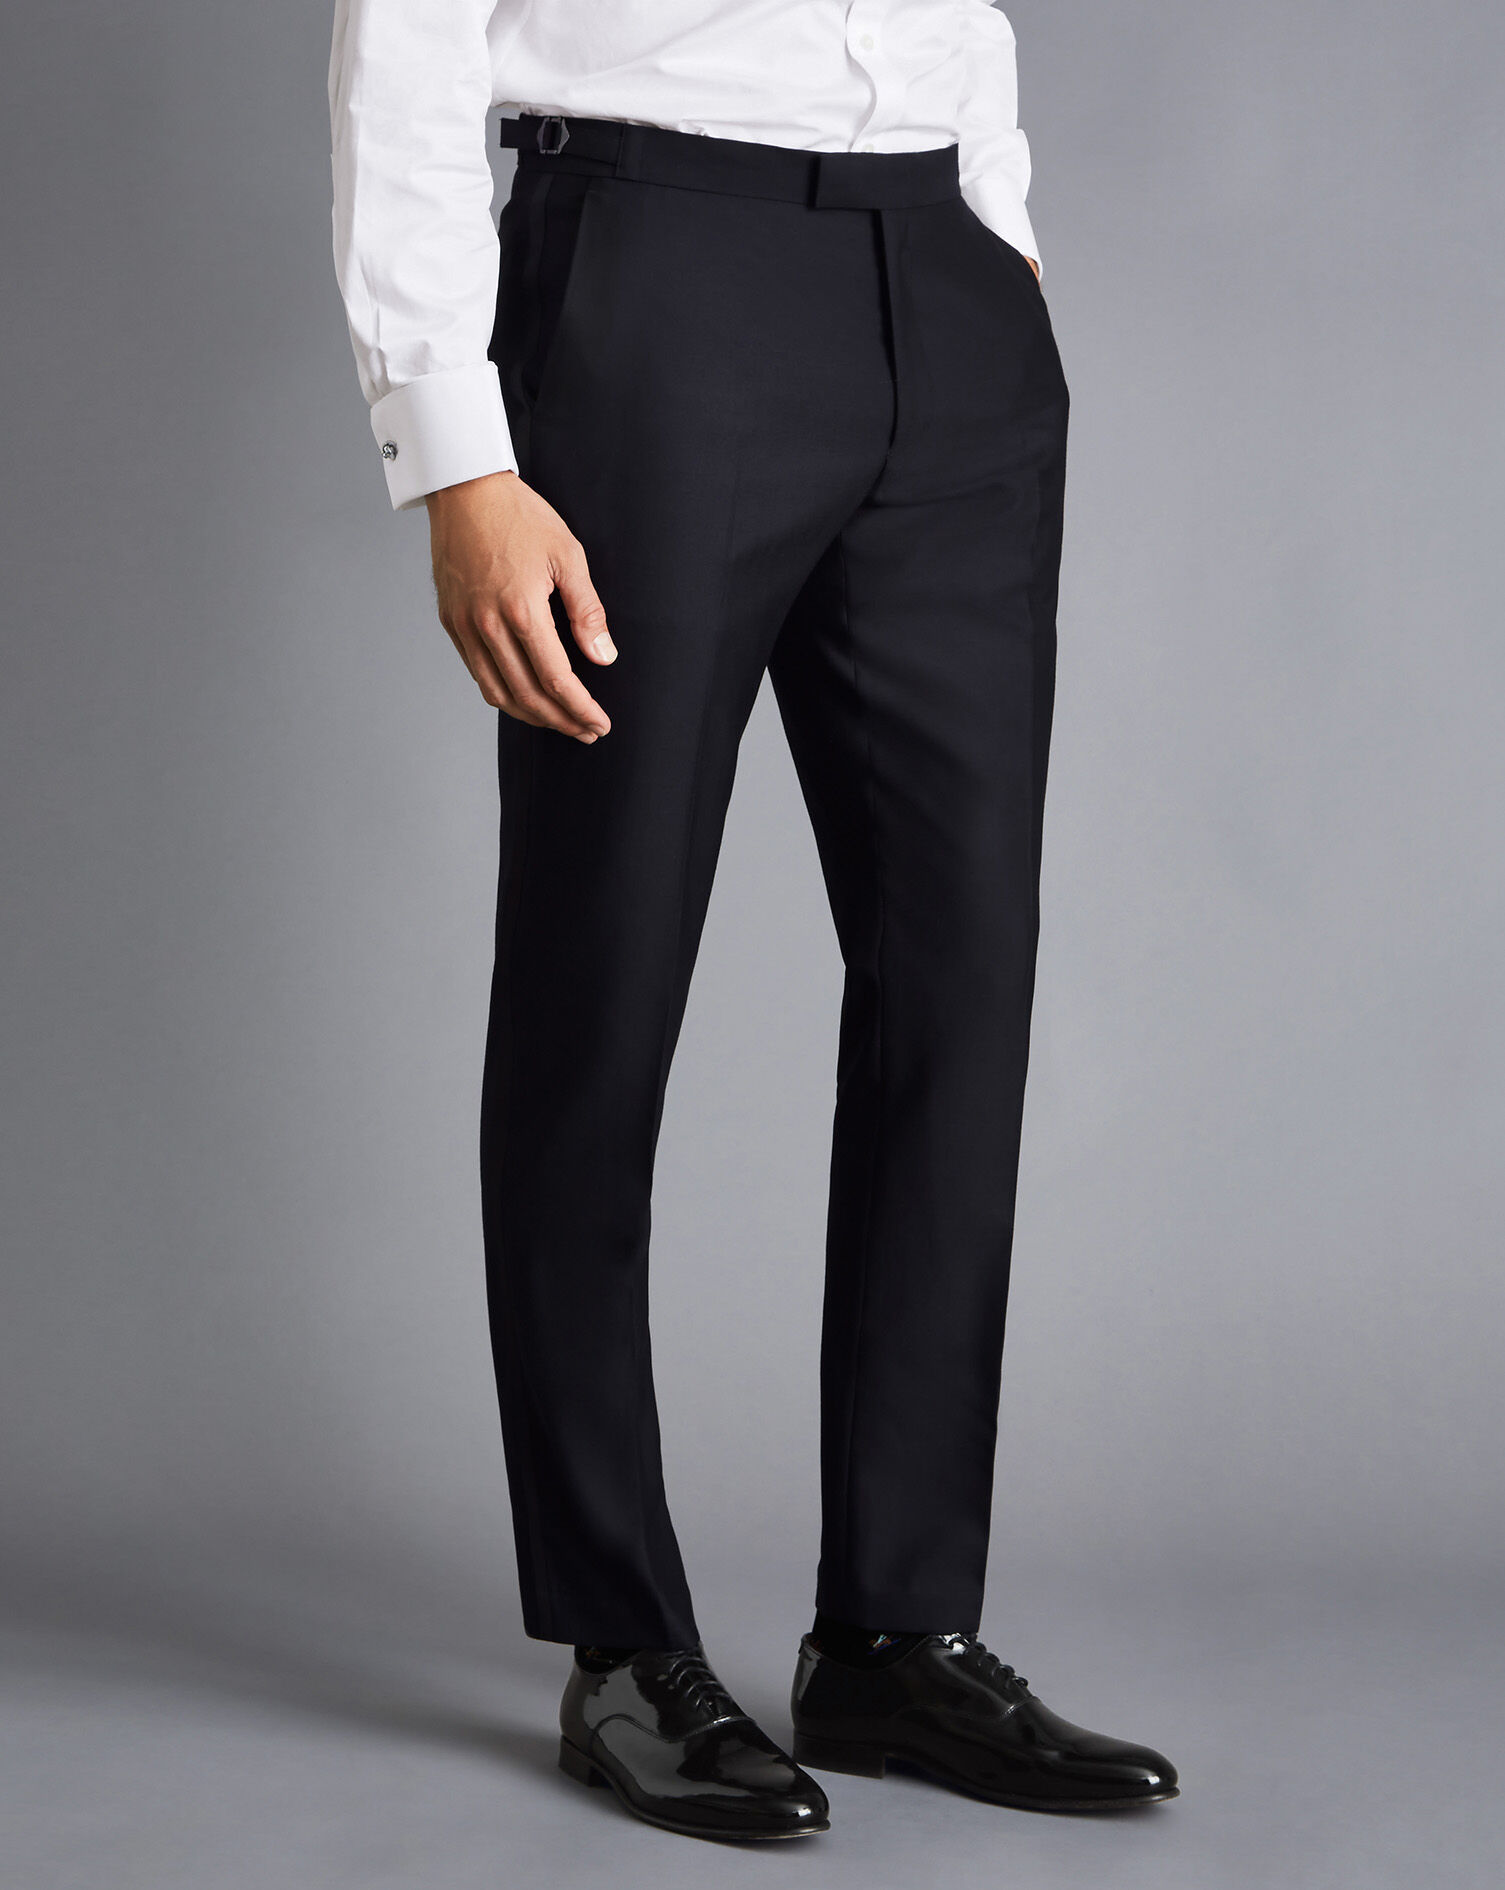 Three Piece Black Textured Formal Suit - Nosfer